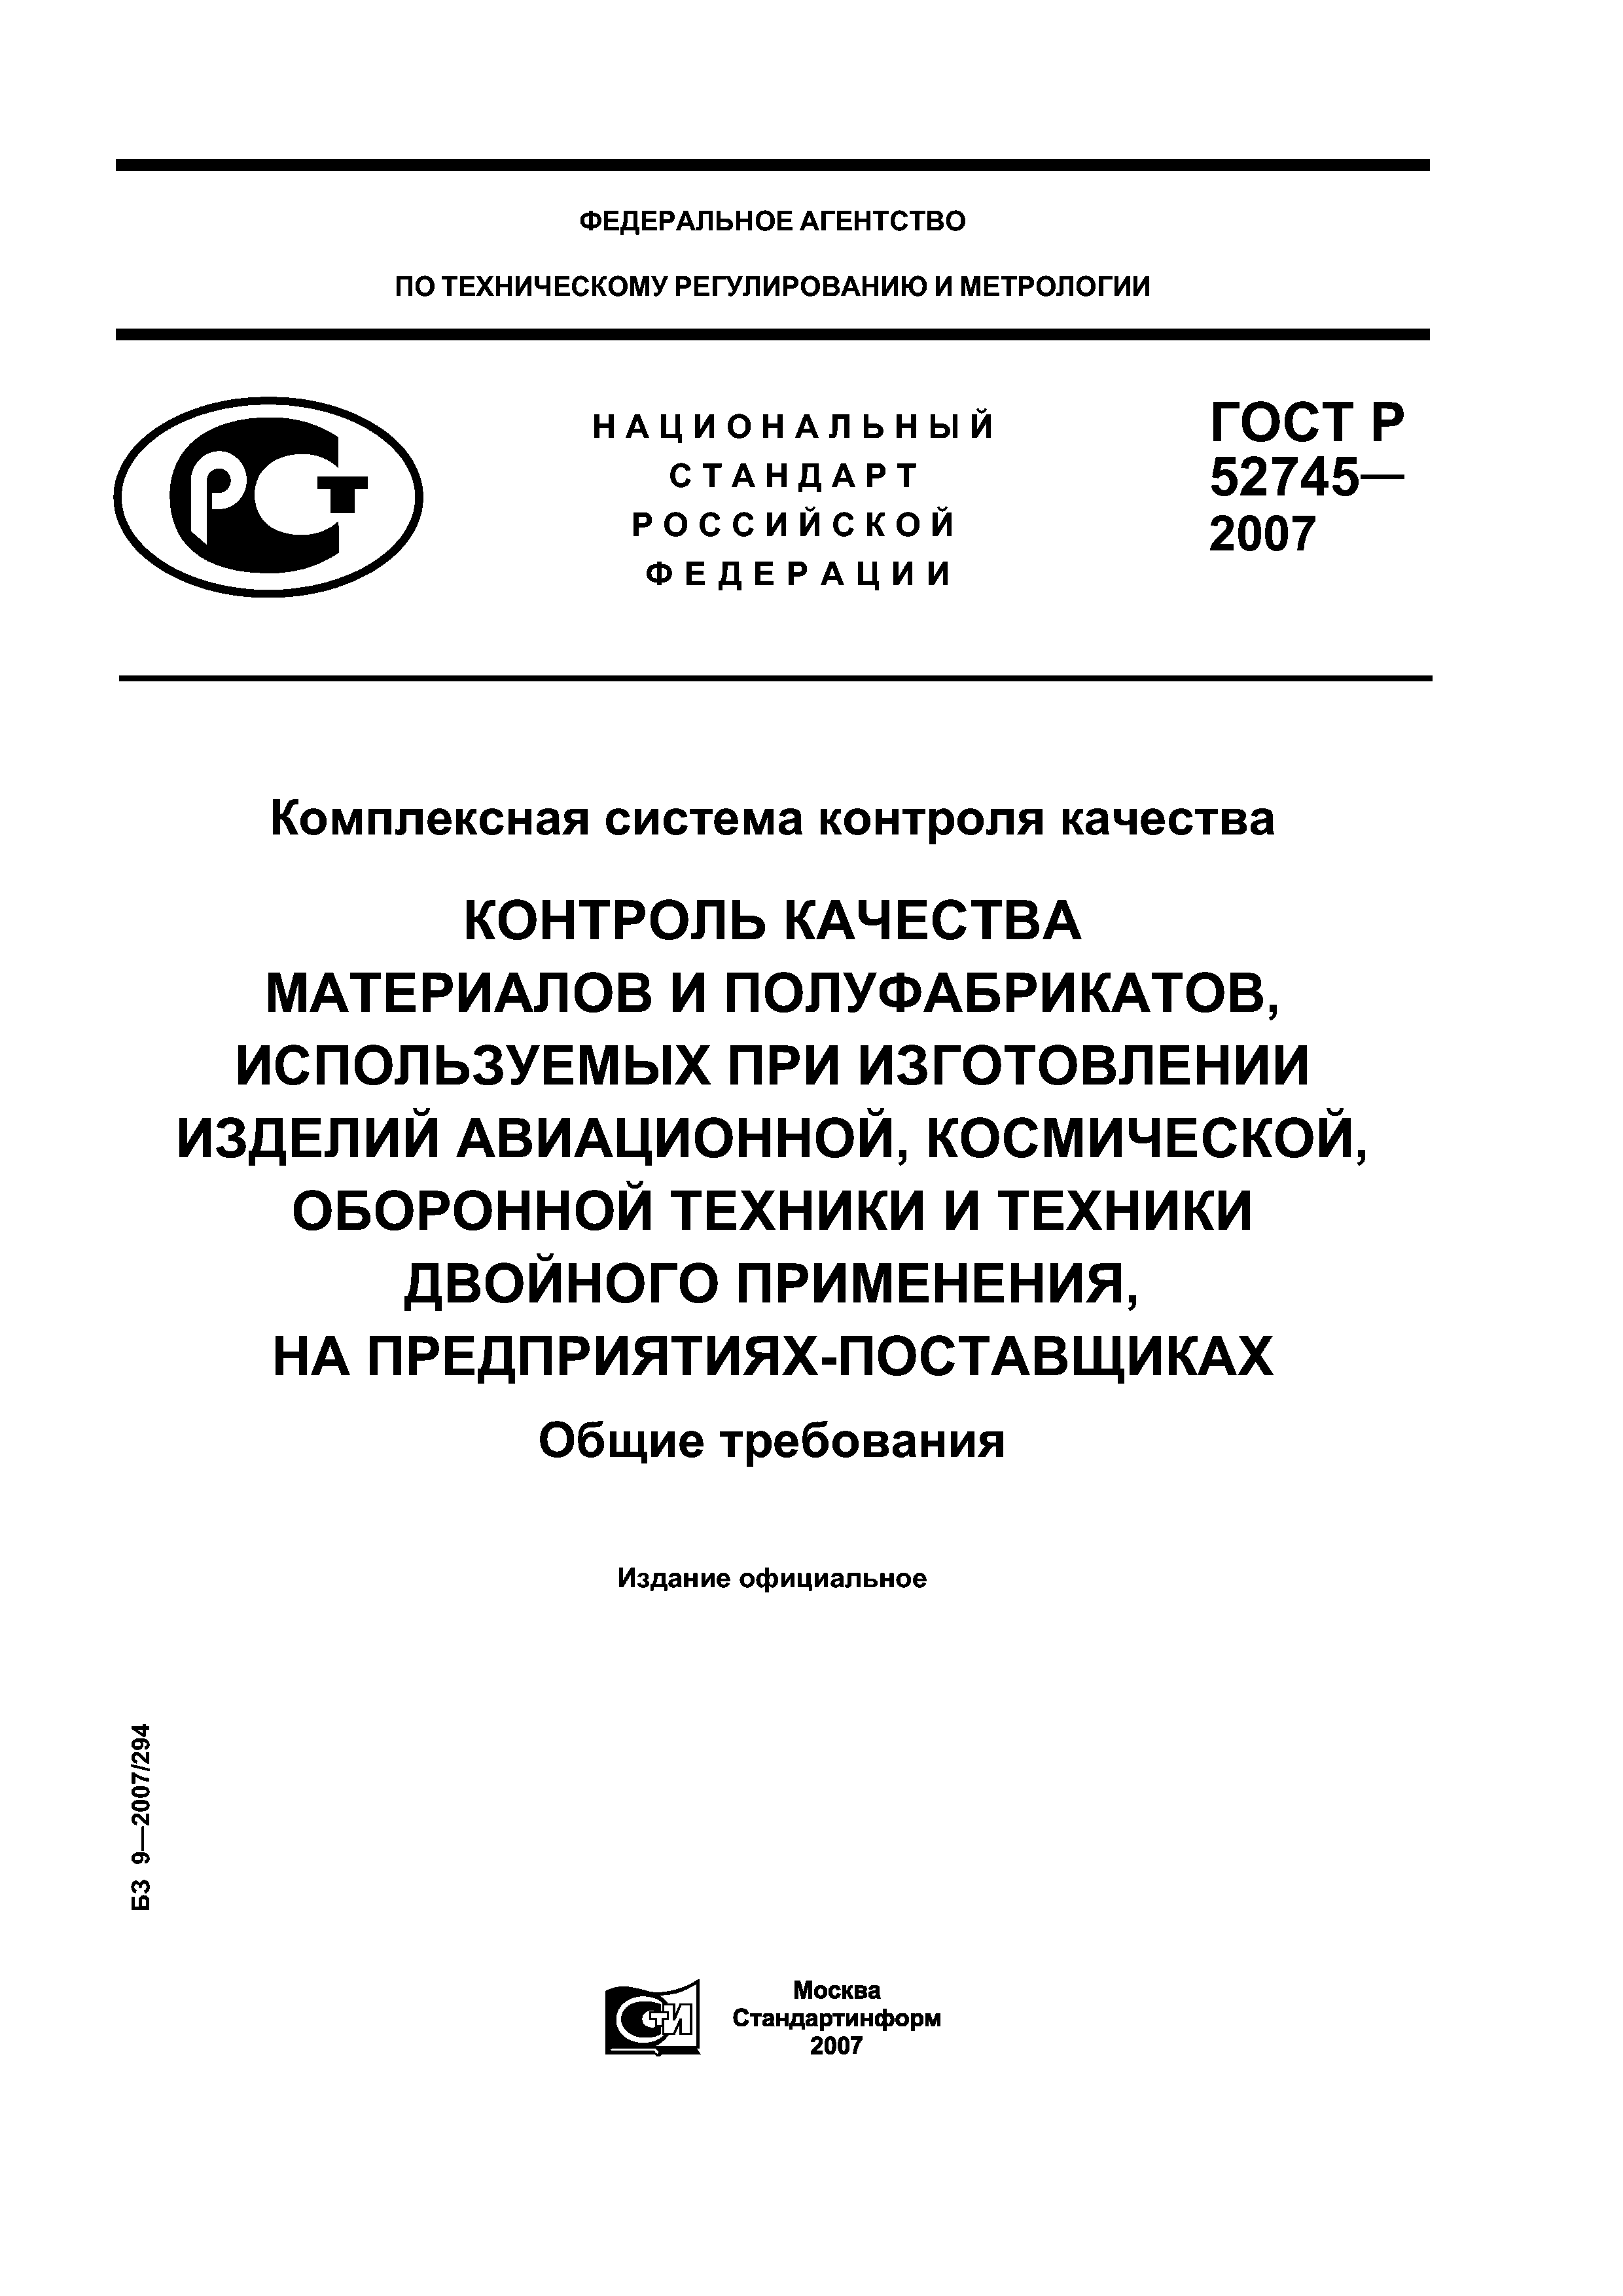 ГОСТ Р 52745-2007